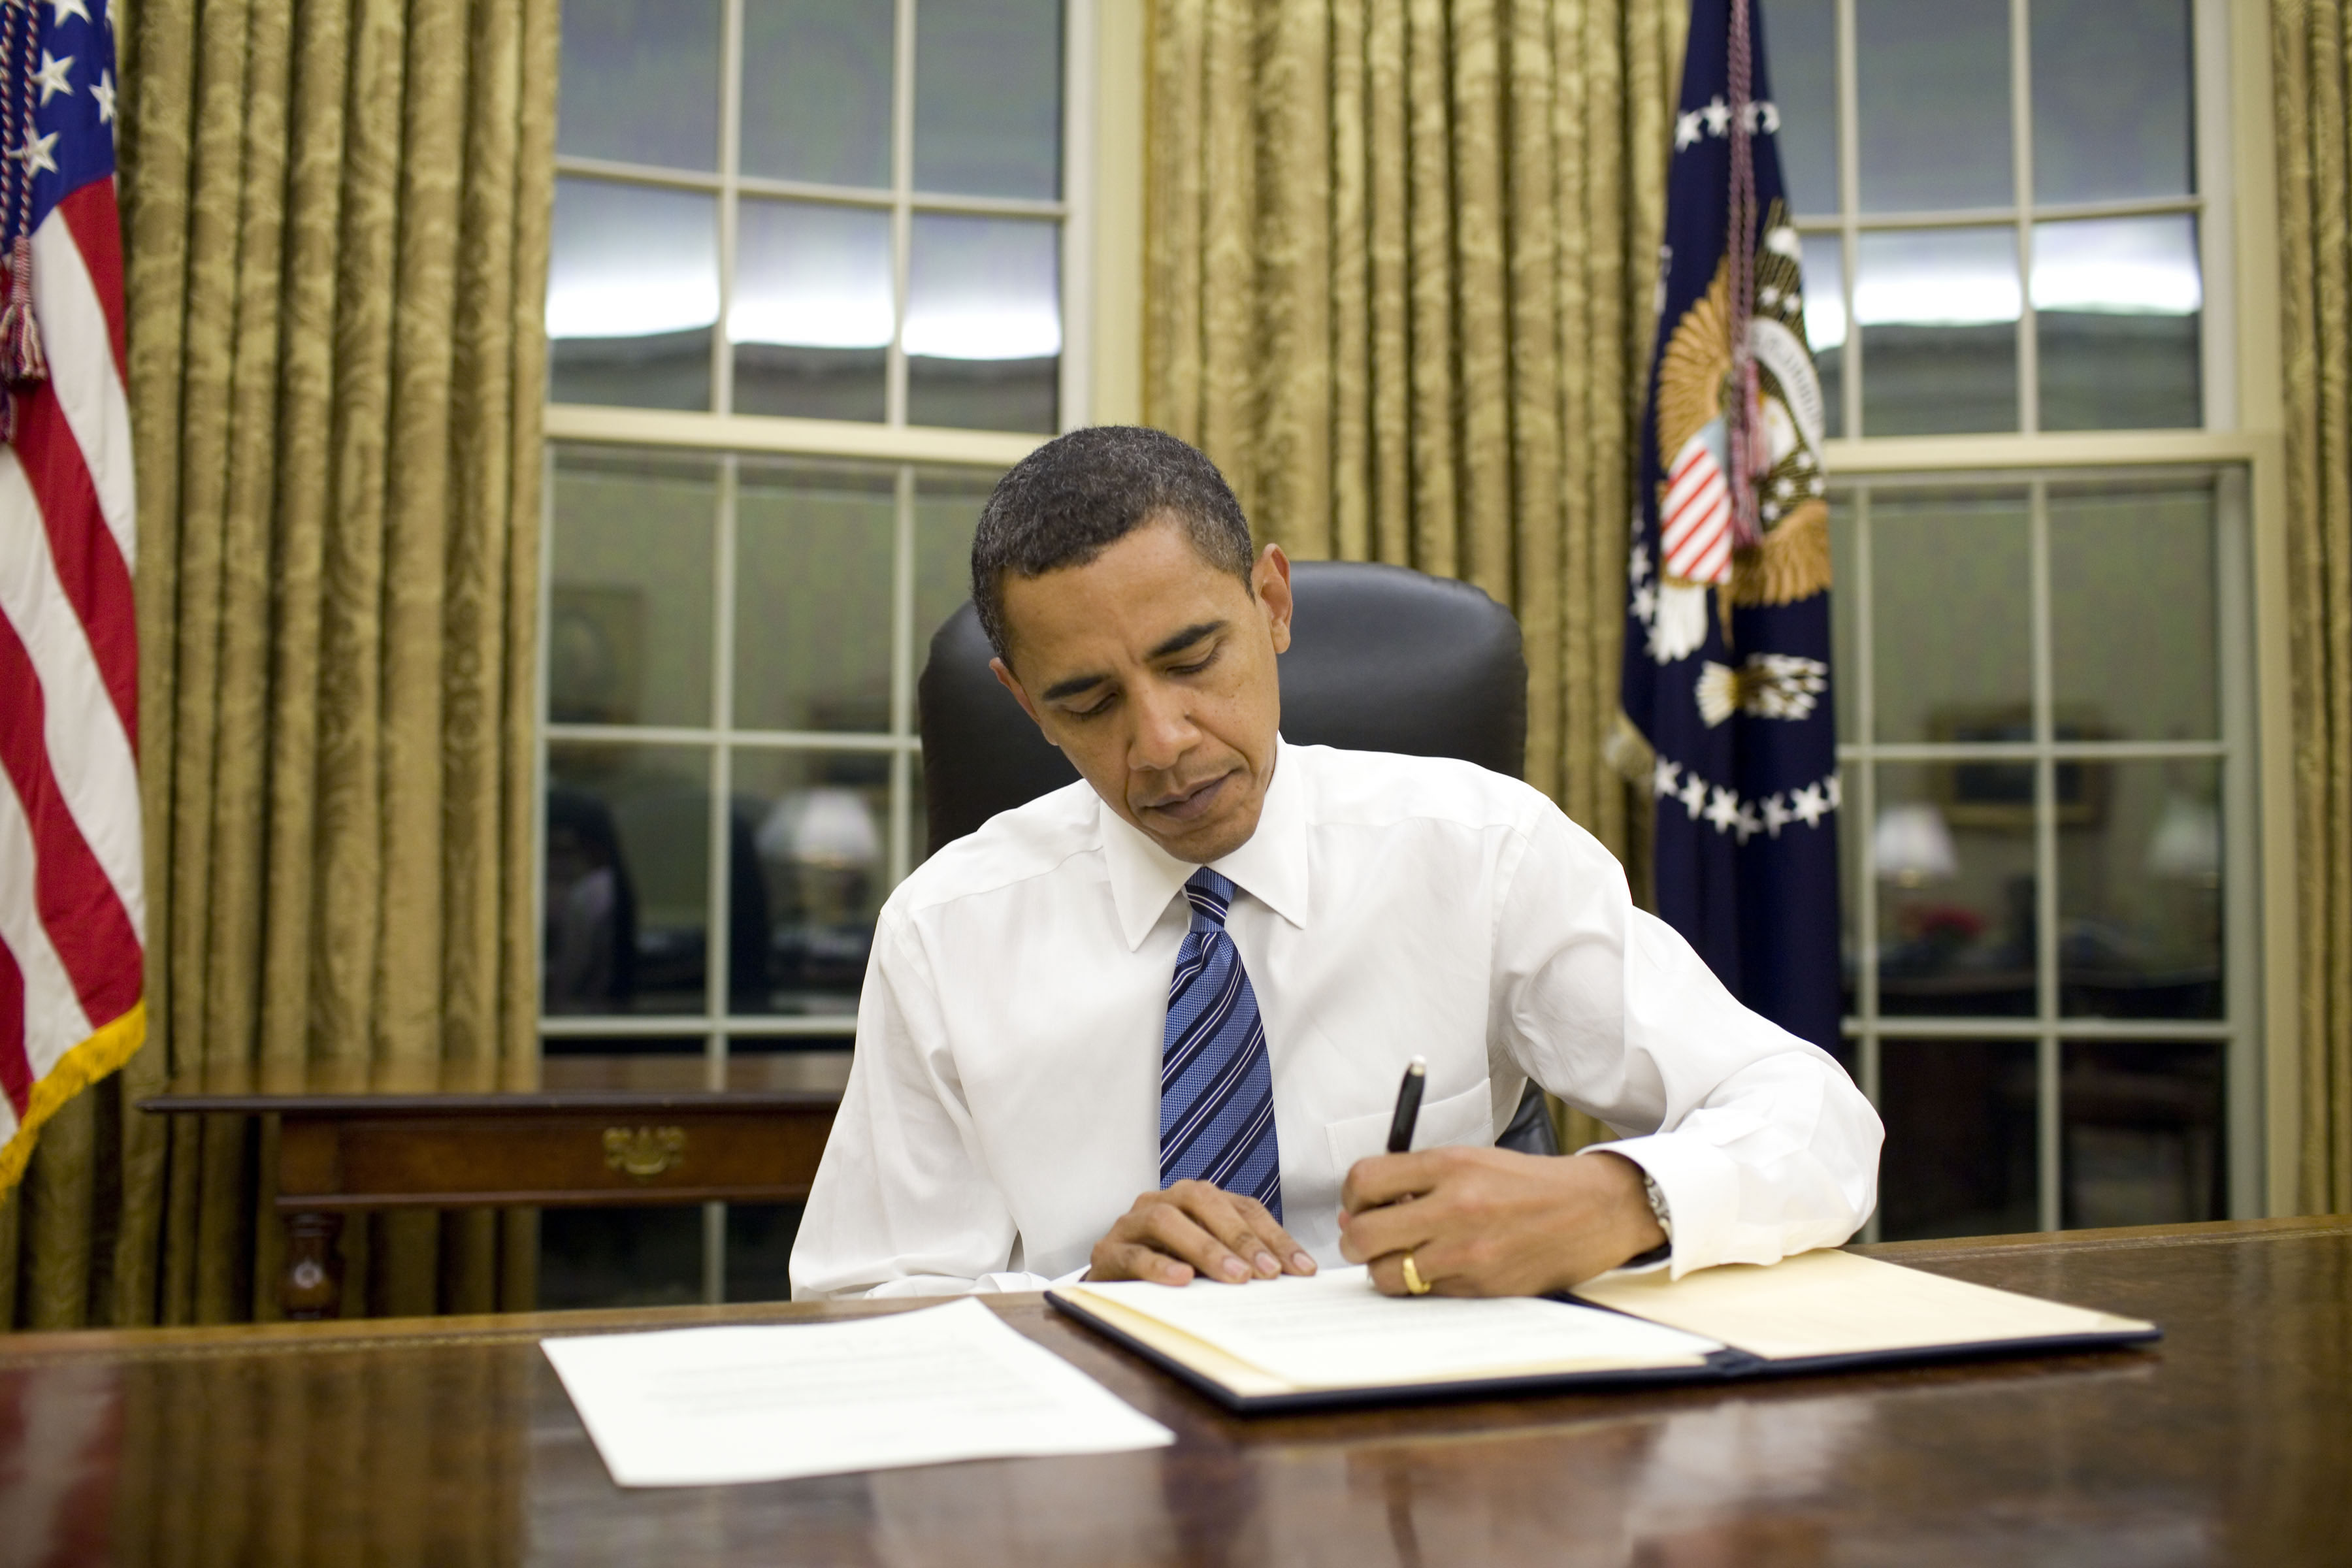 Obama Highlights Education Reform in SOTU Speech